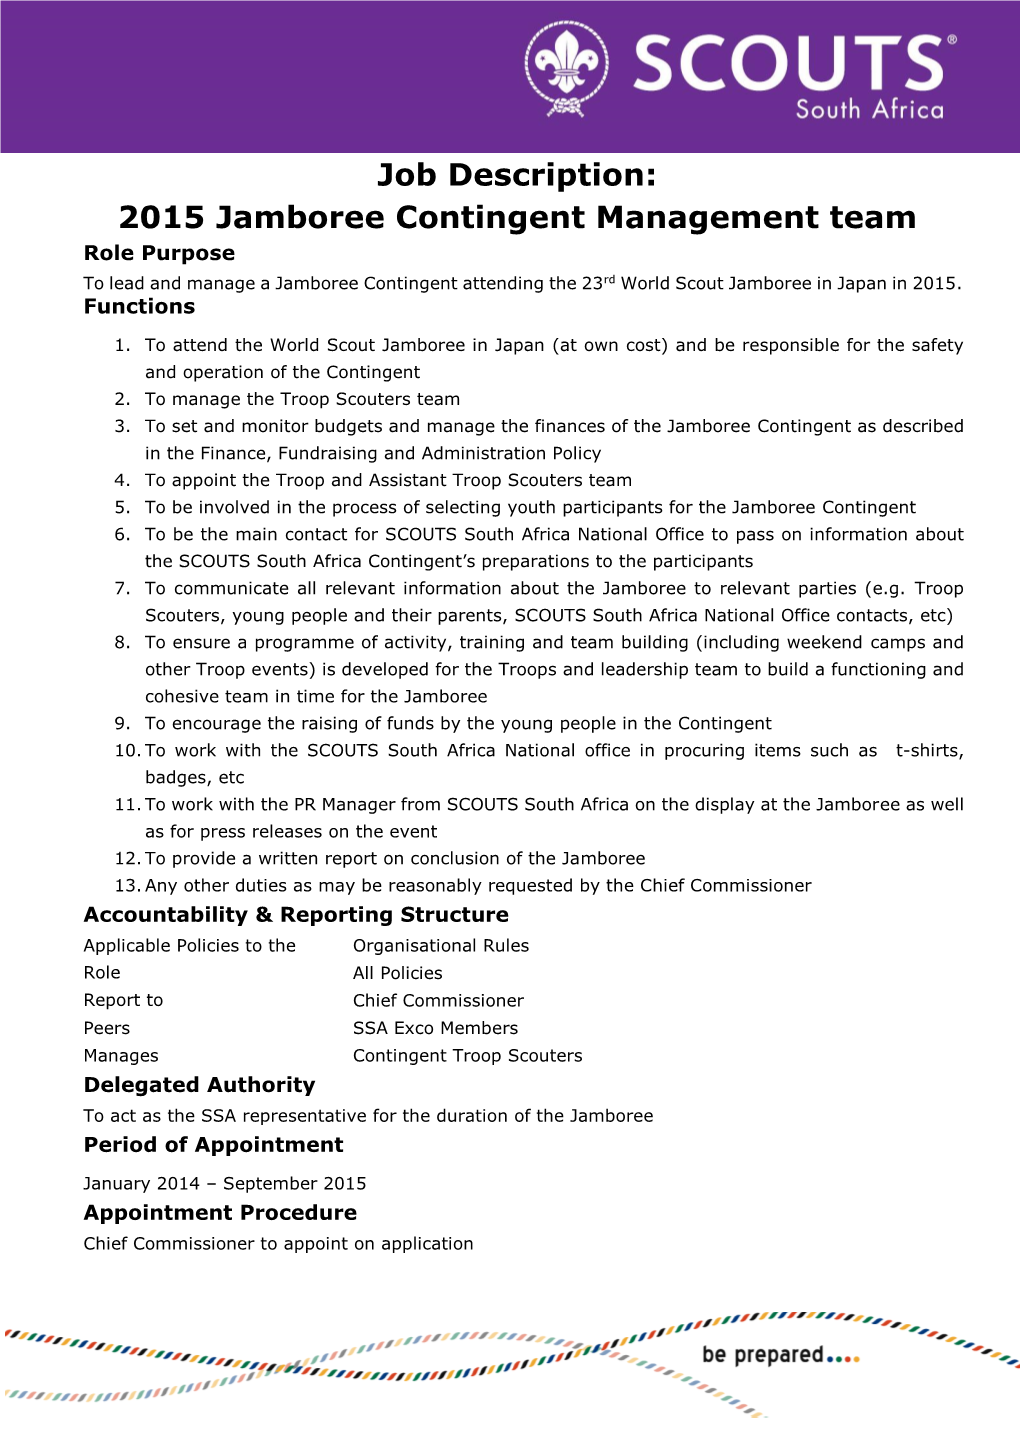 Job Description: 2015 Jamboree Contingent Management Team